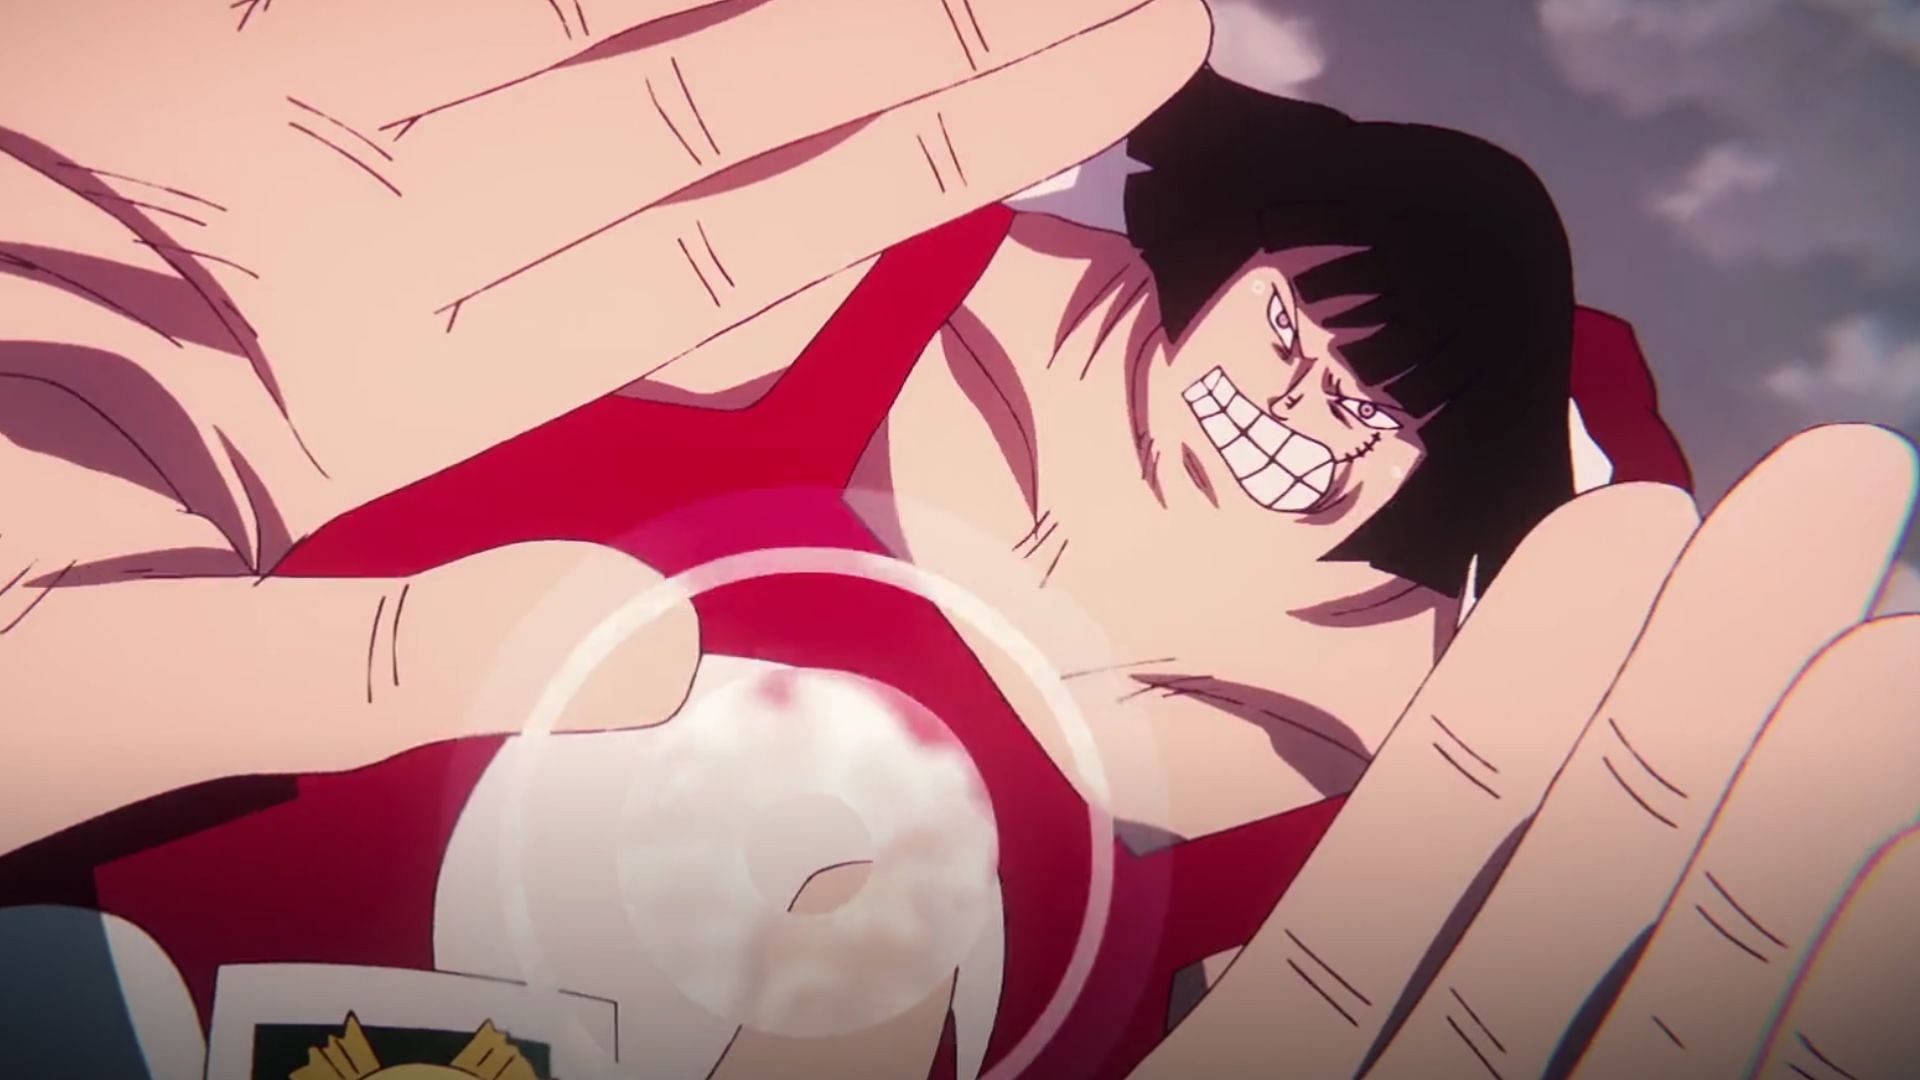 Sentomaru as seen in the One Piece anime (Image via Toei)